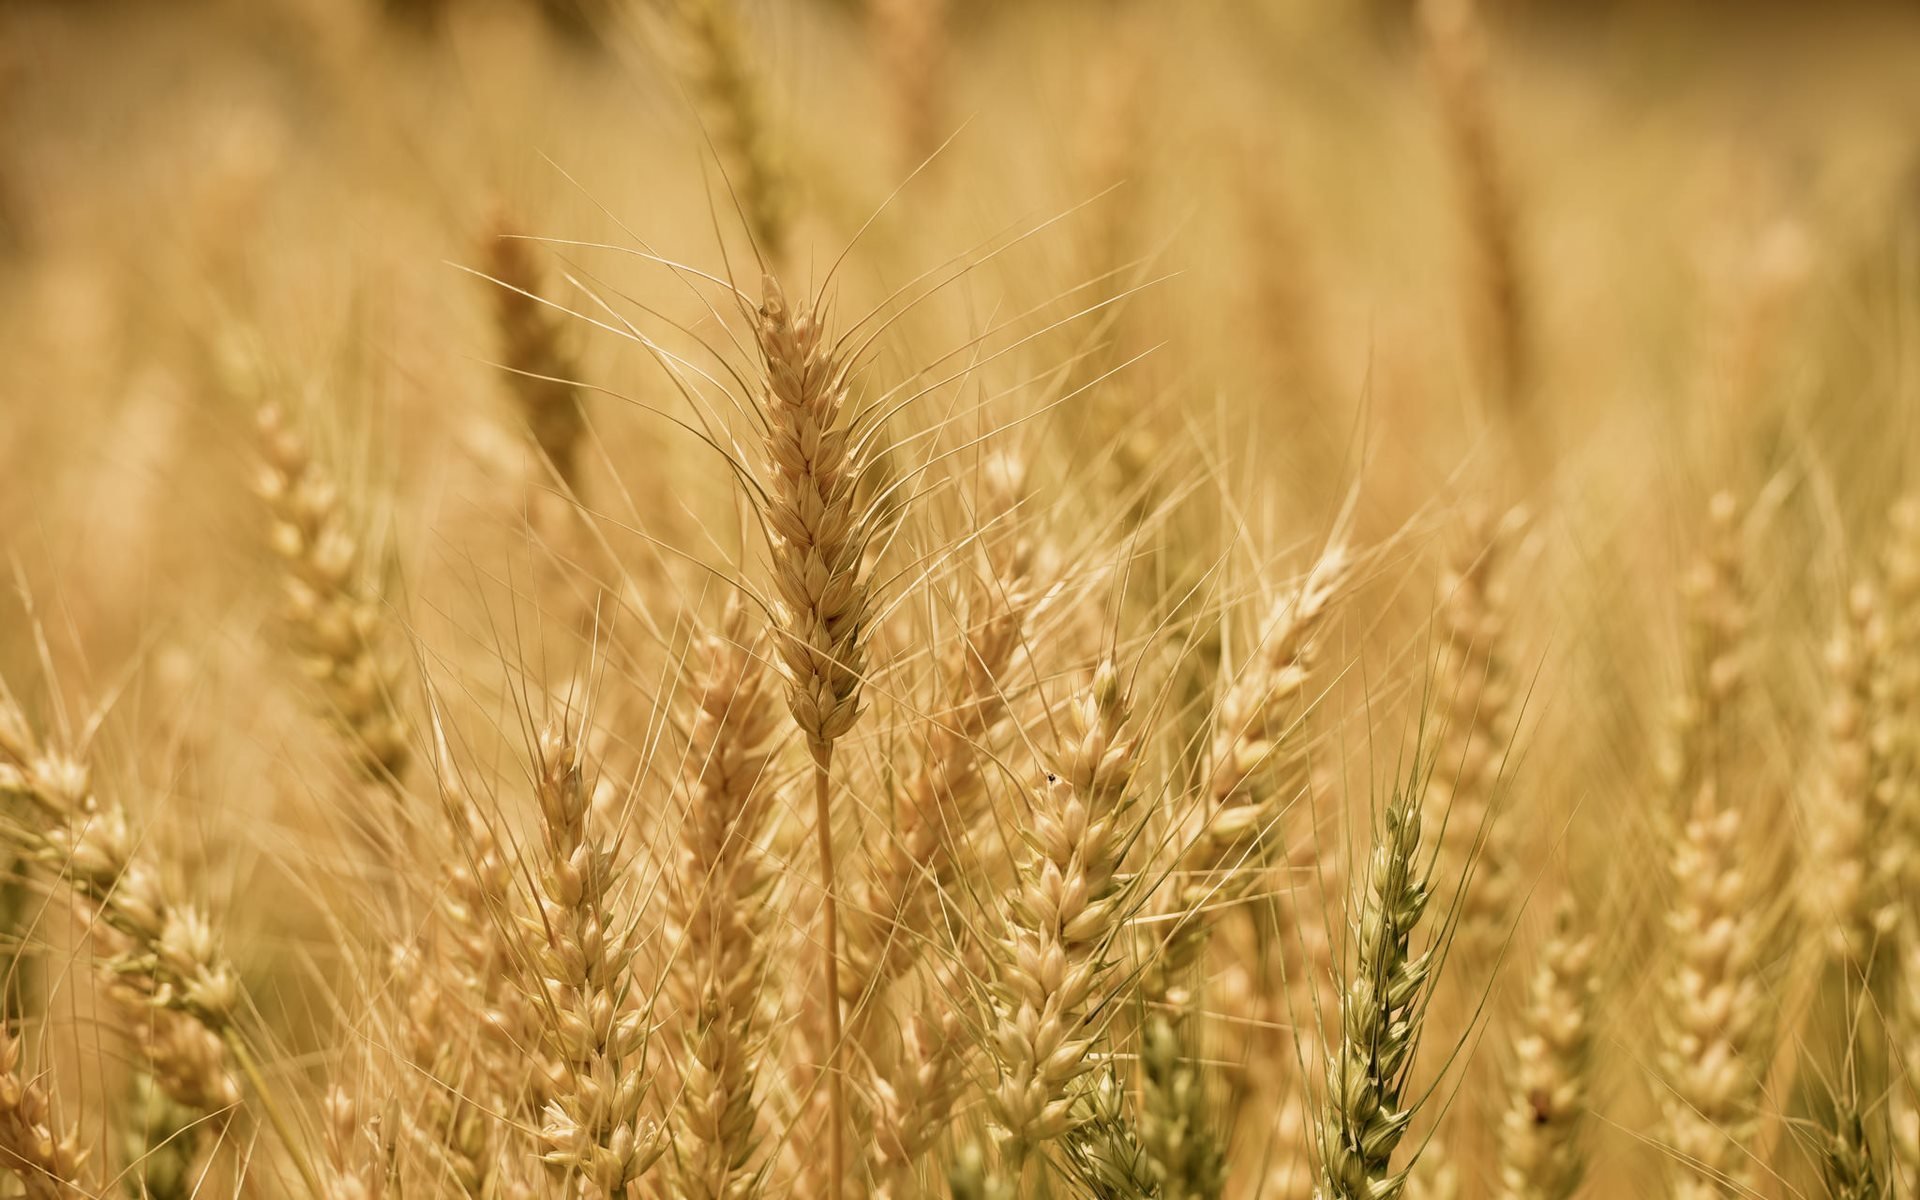 Harvest Gold. Wheat spikelet. Tarla. Barley spikelets: a - Double Row; b - Multi Row. Natural harvest